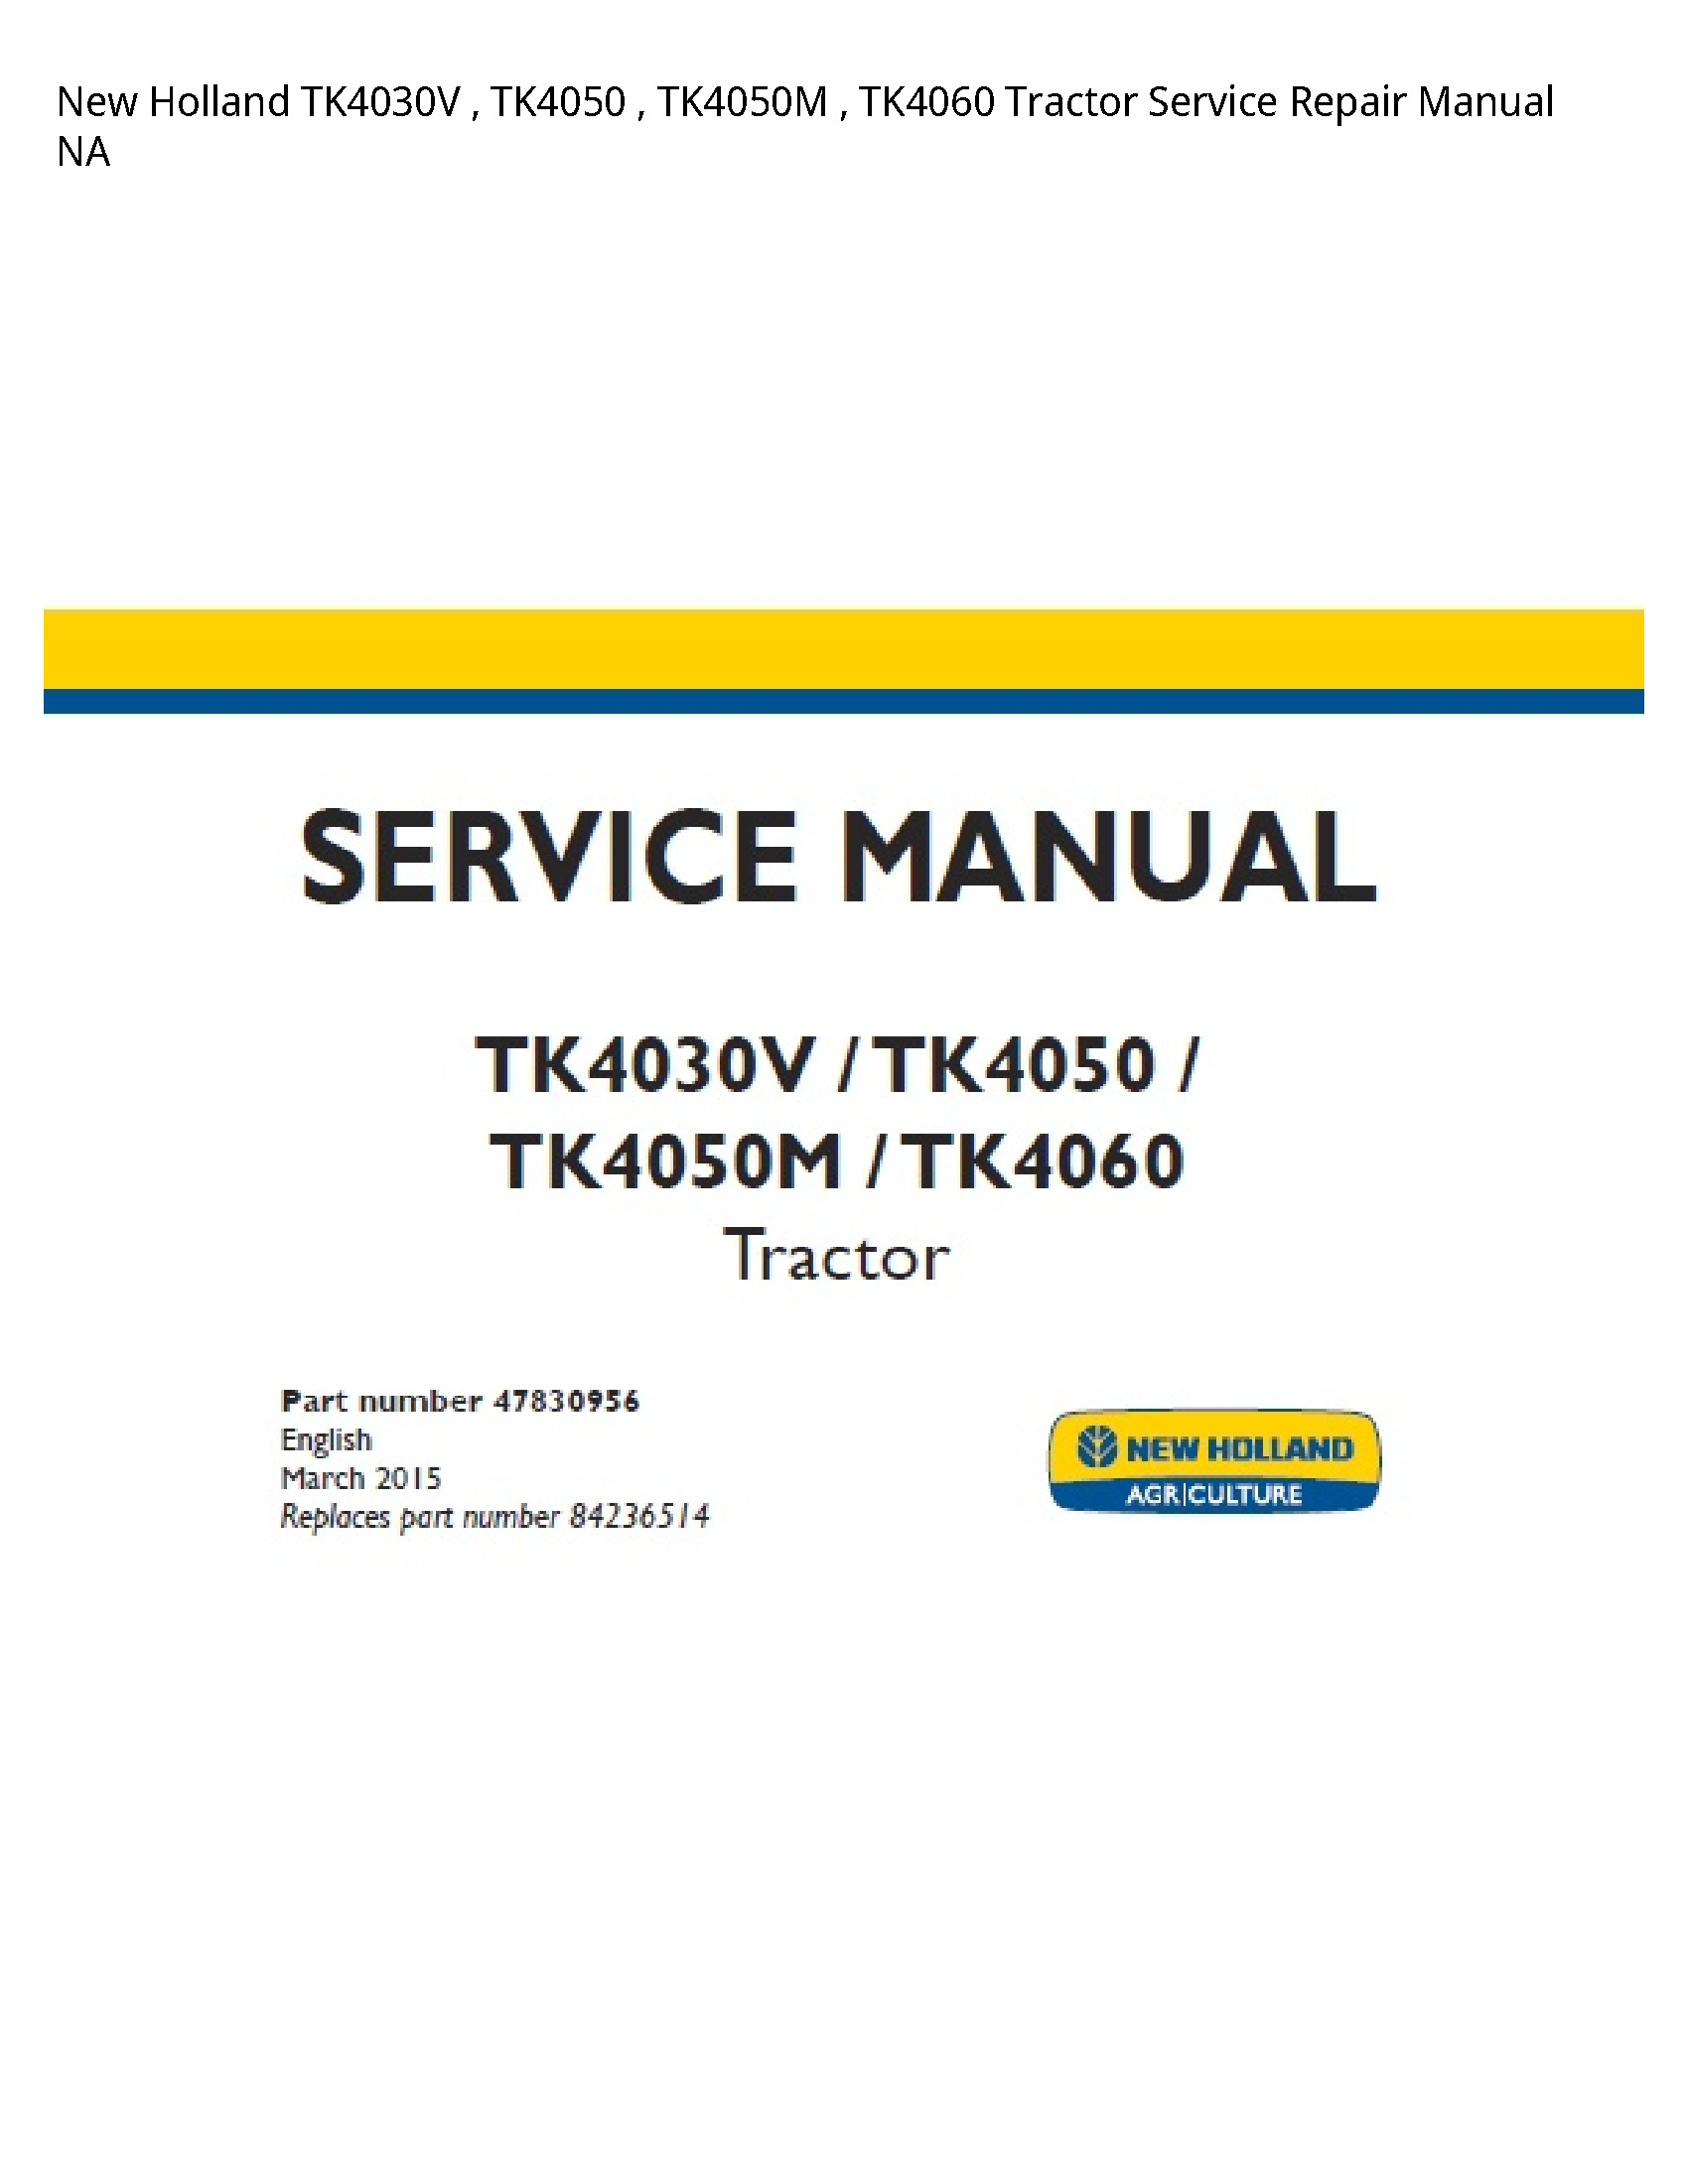 New Holland TK4030V Tractor manual